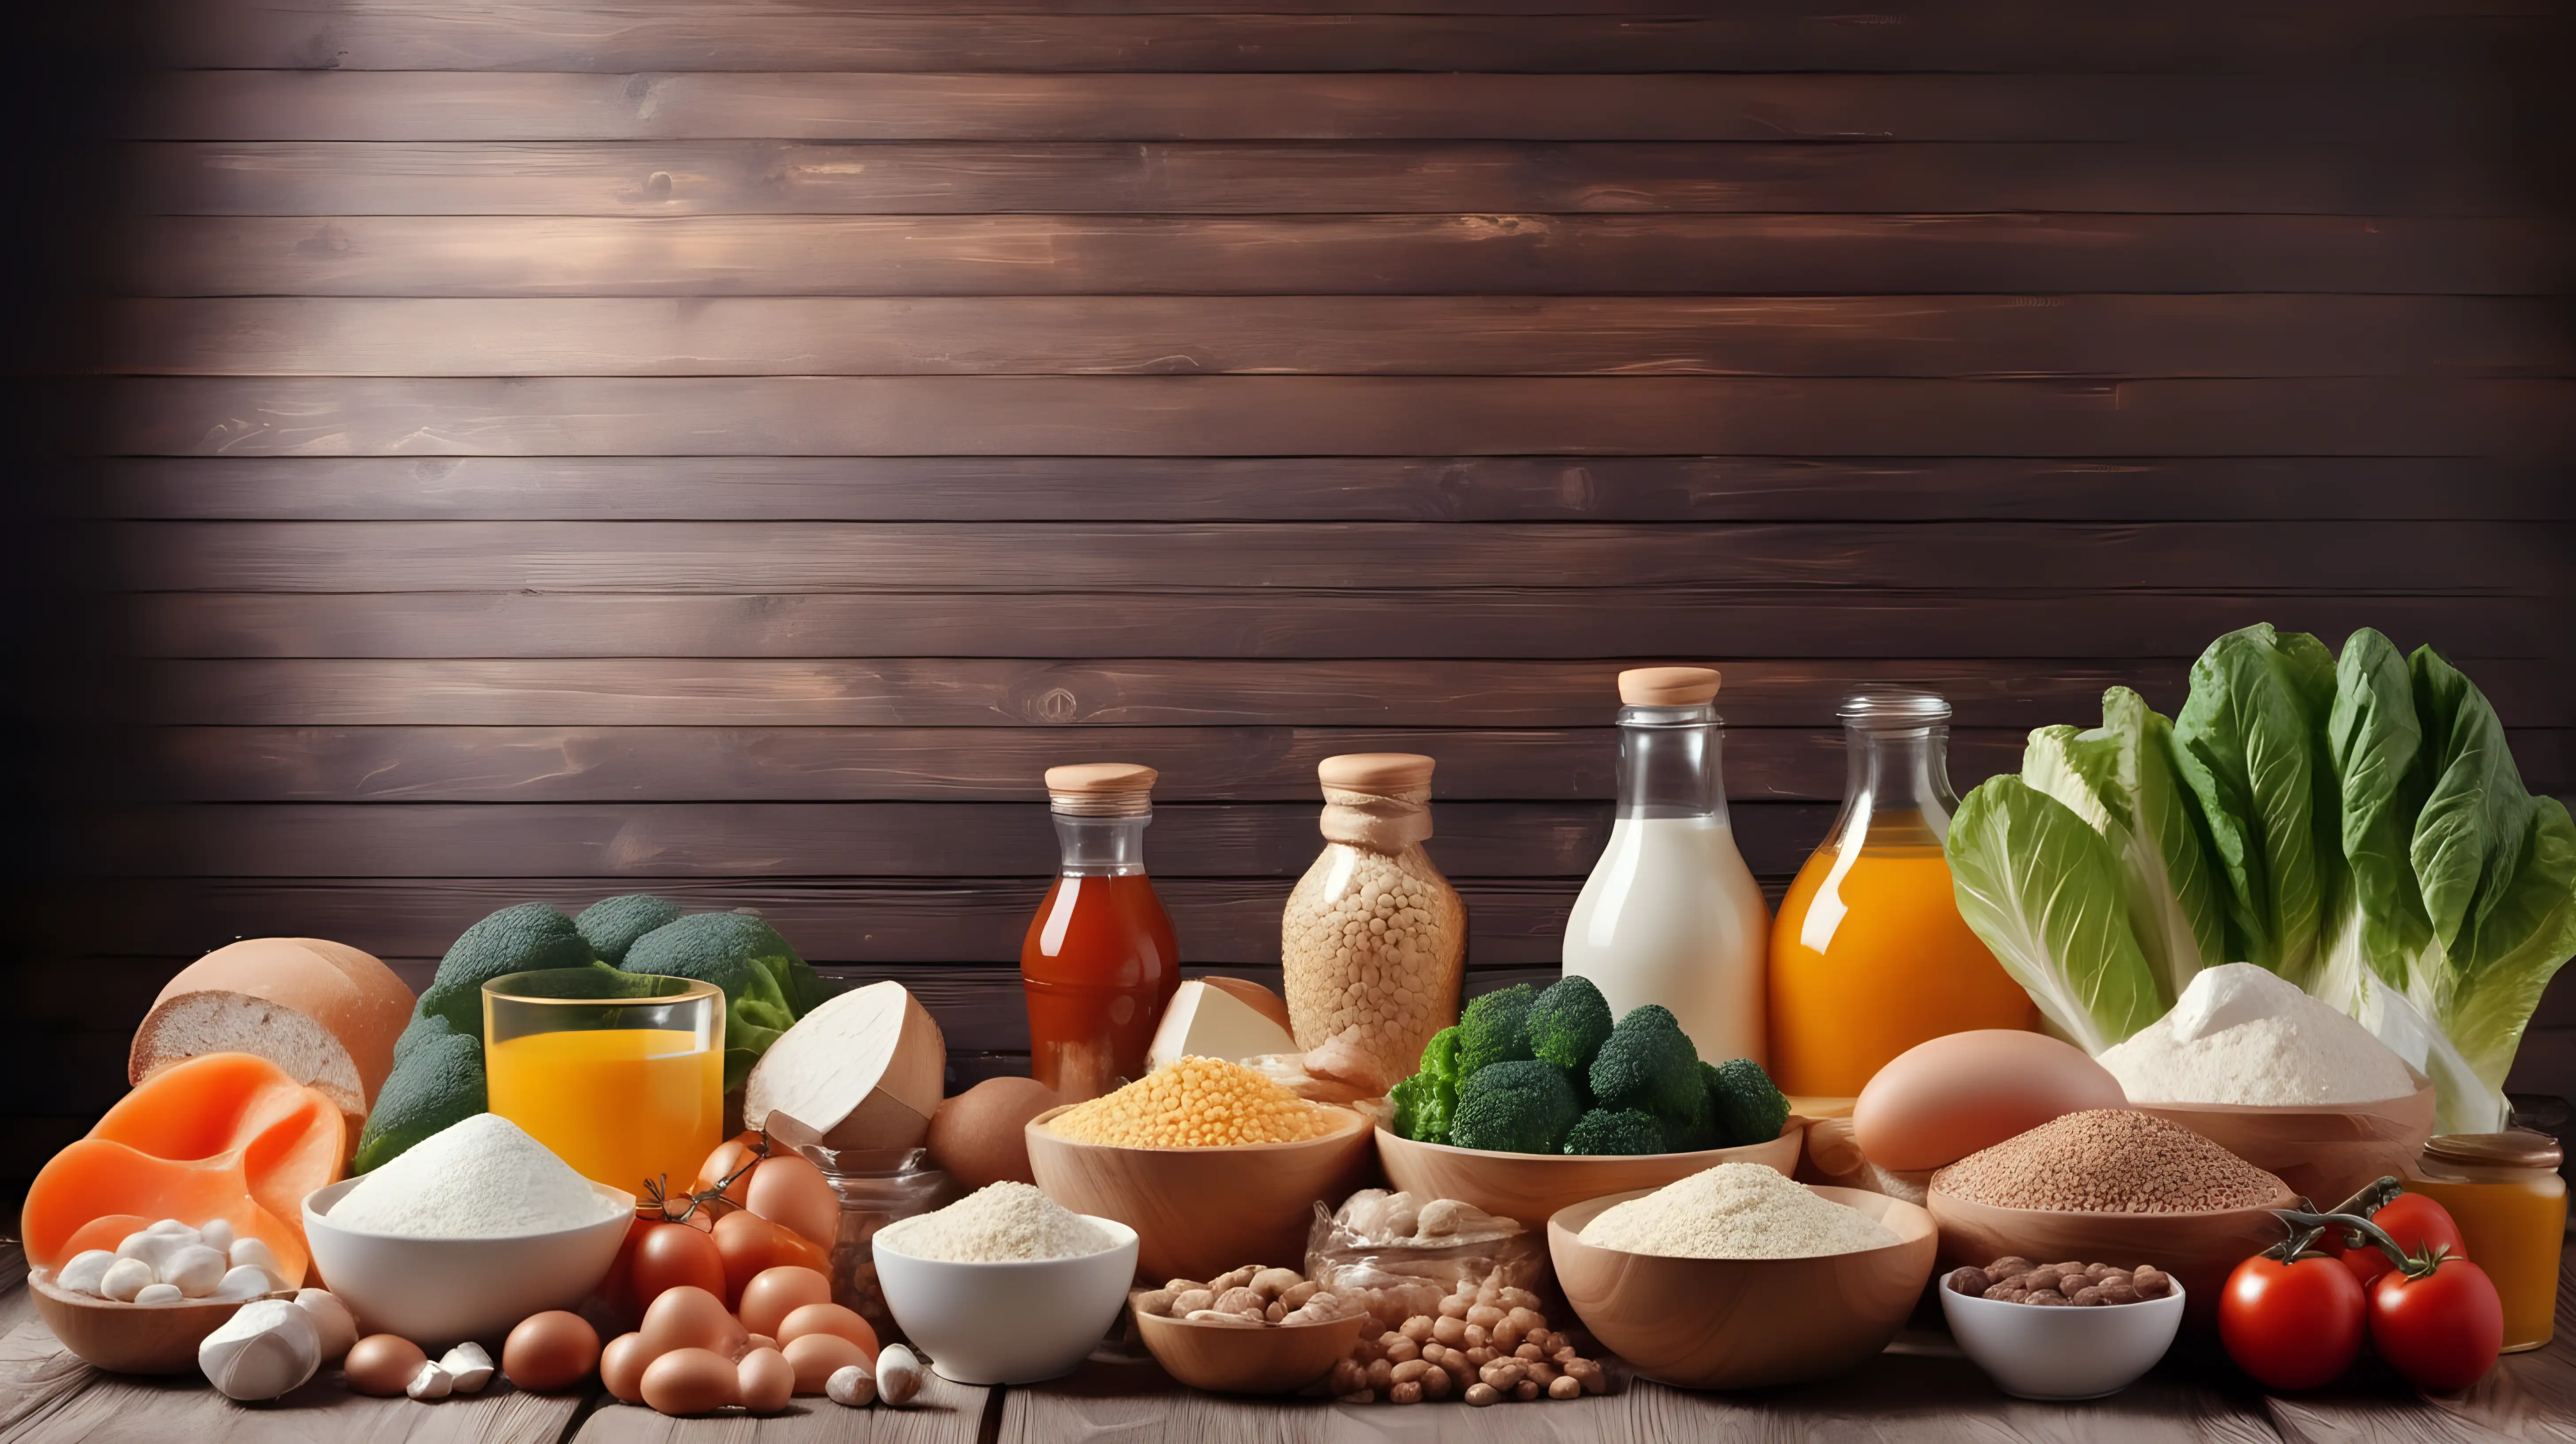 NutrientRich Ingredients Arranged on Wooden Background for Healthy Diet Concept